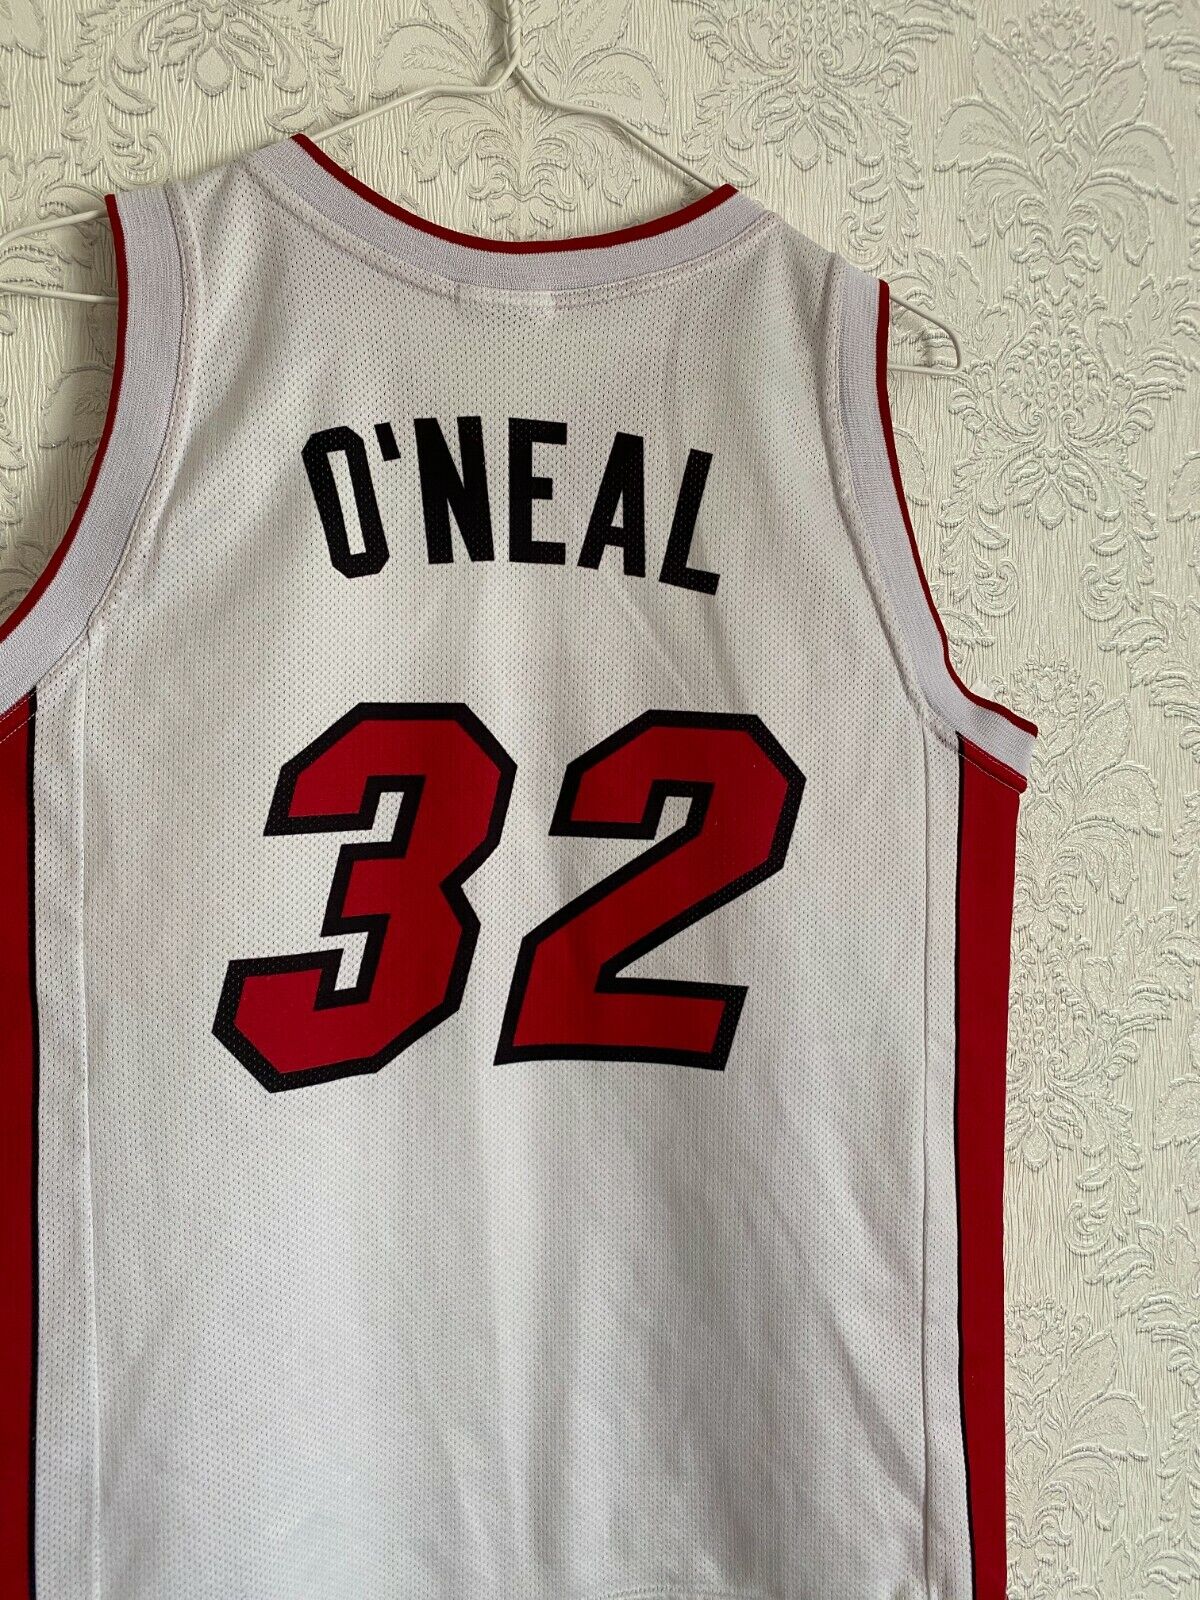 NBA Miami Heat Shaquille O'Neal #32 shirt Champion Jersey